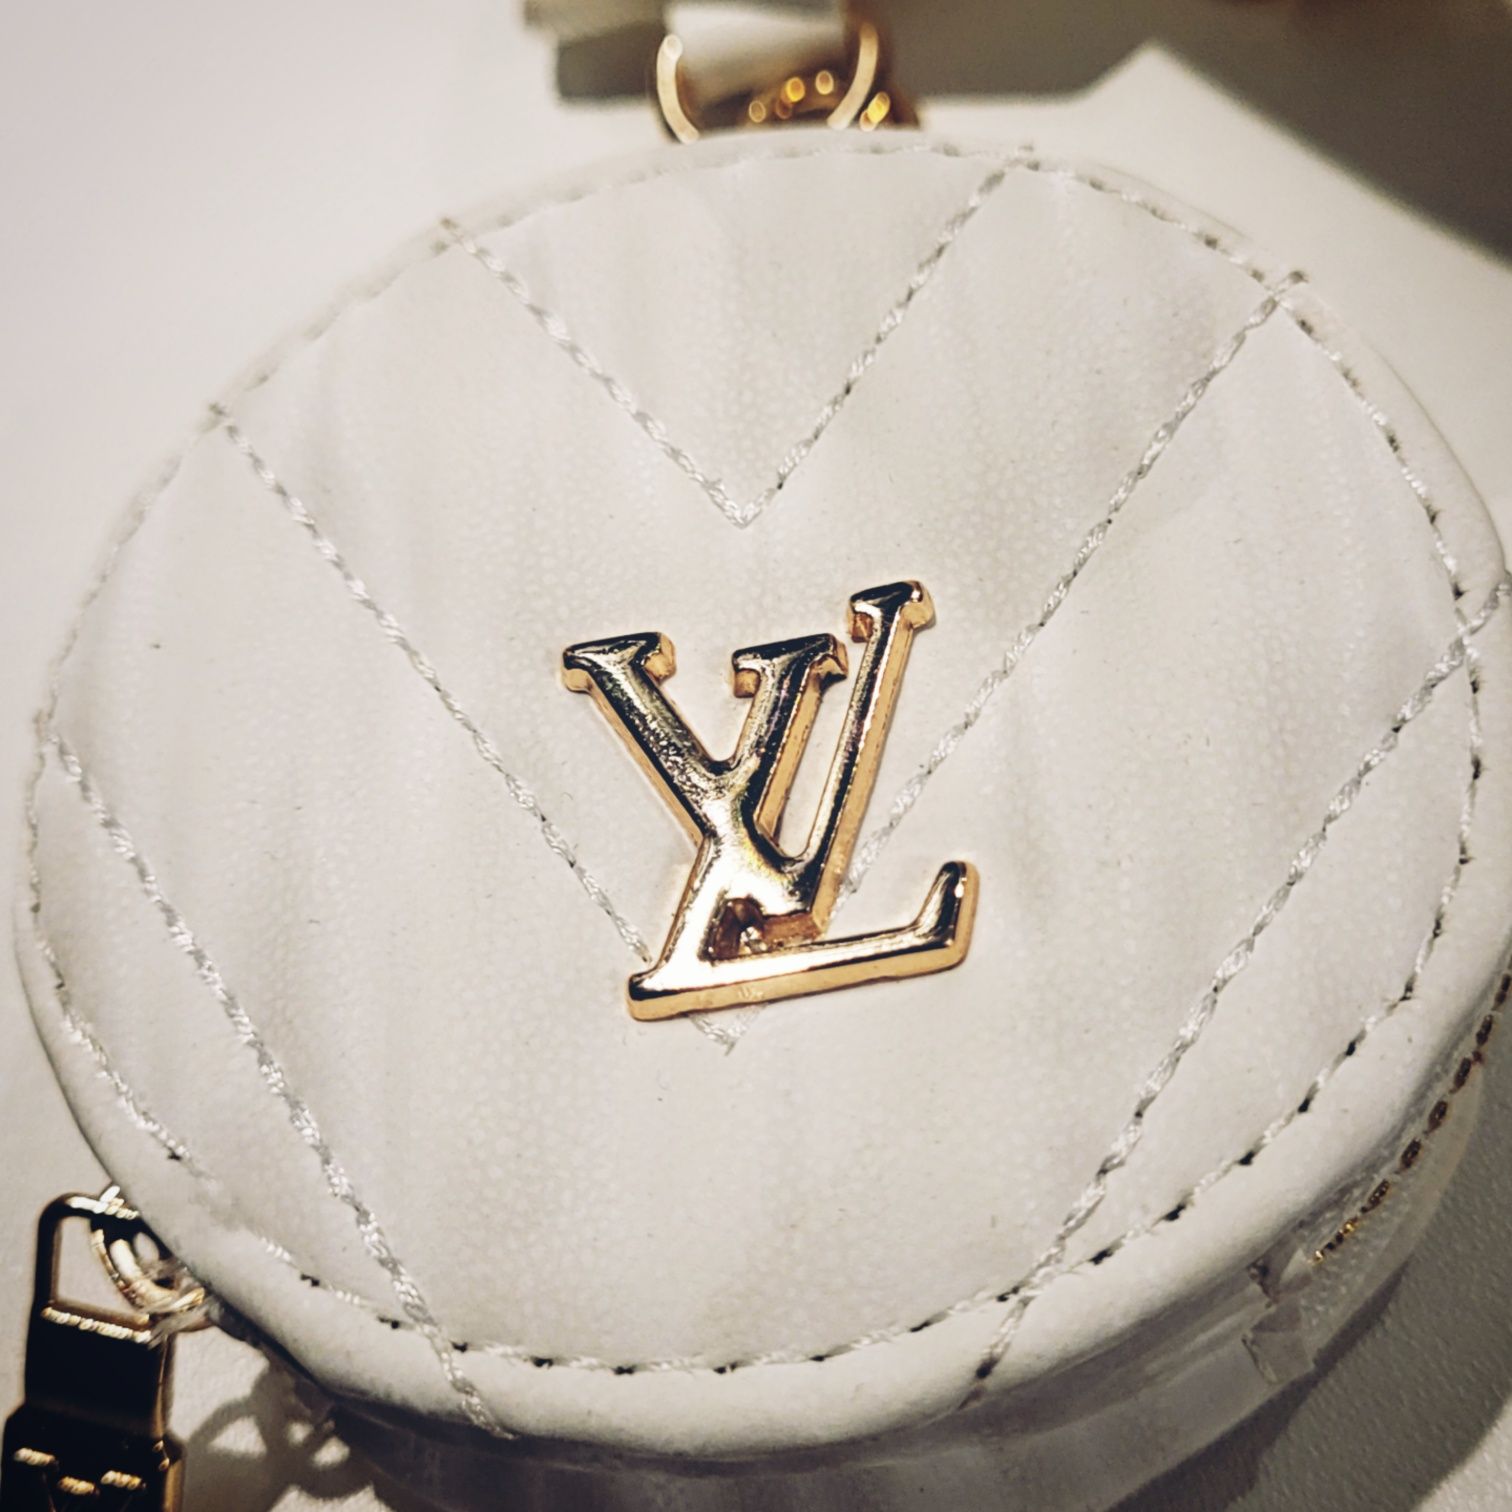 LV Torebka Louis Vuitton biała złote dodatki + portfelik